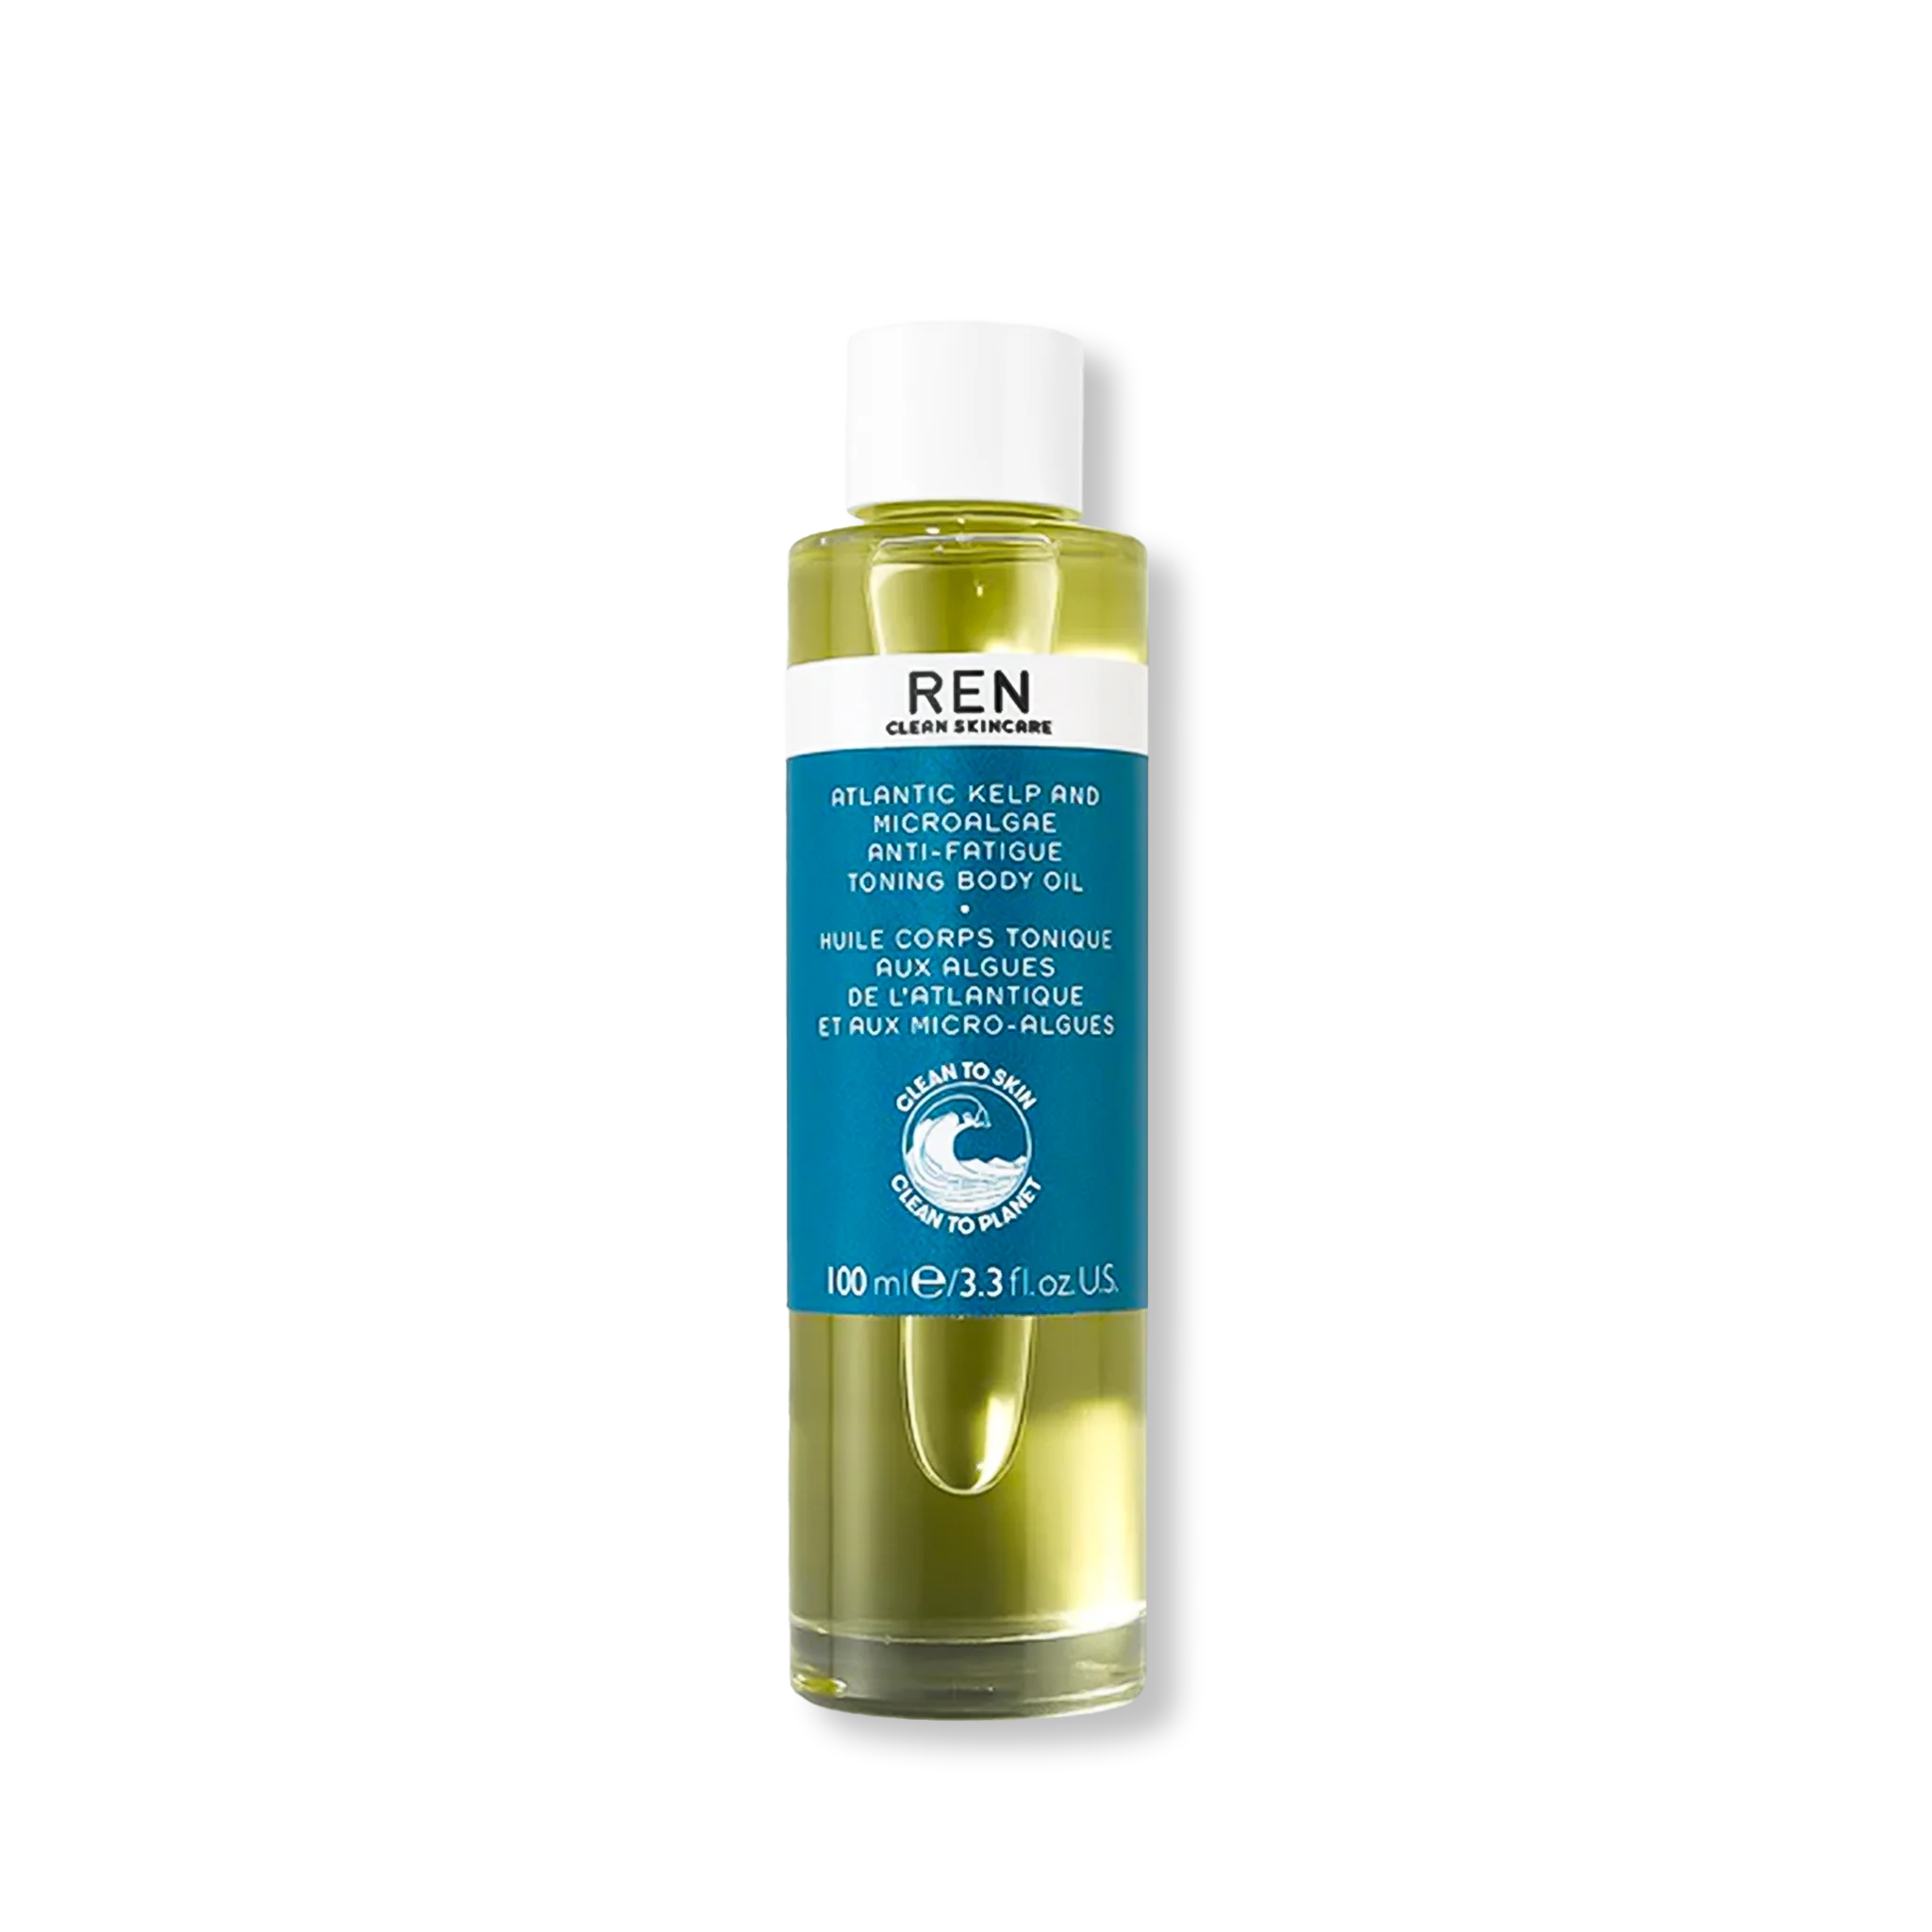 REN Atlantic Kelp + Microalgae Toning Body Oil